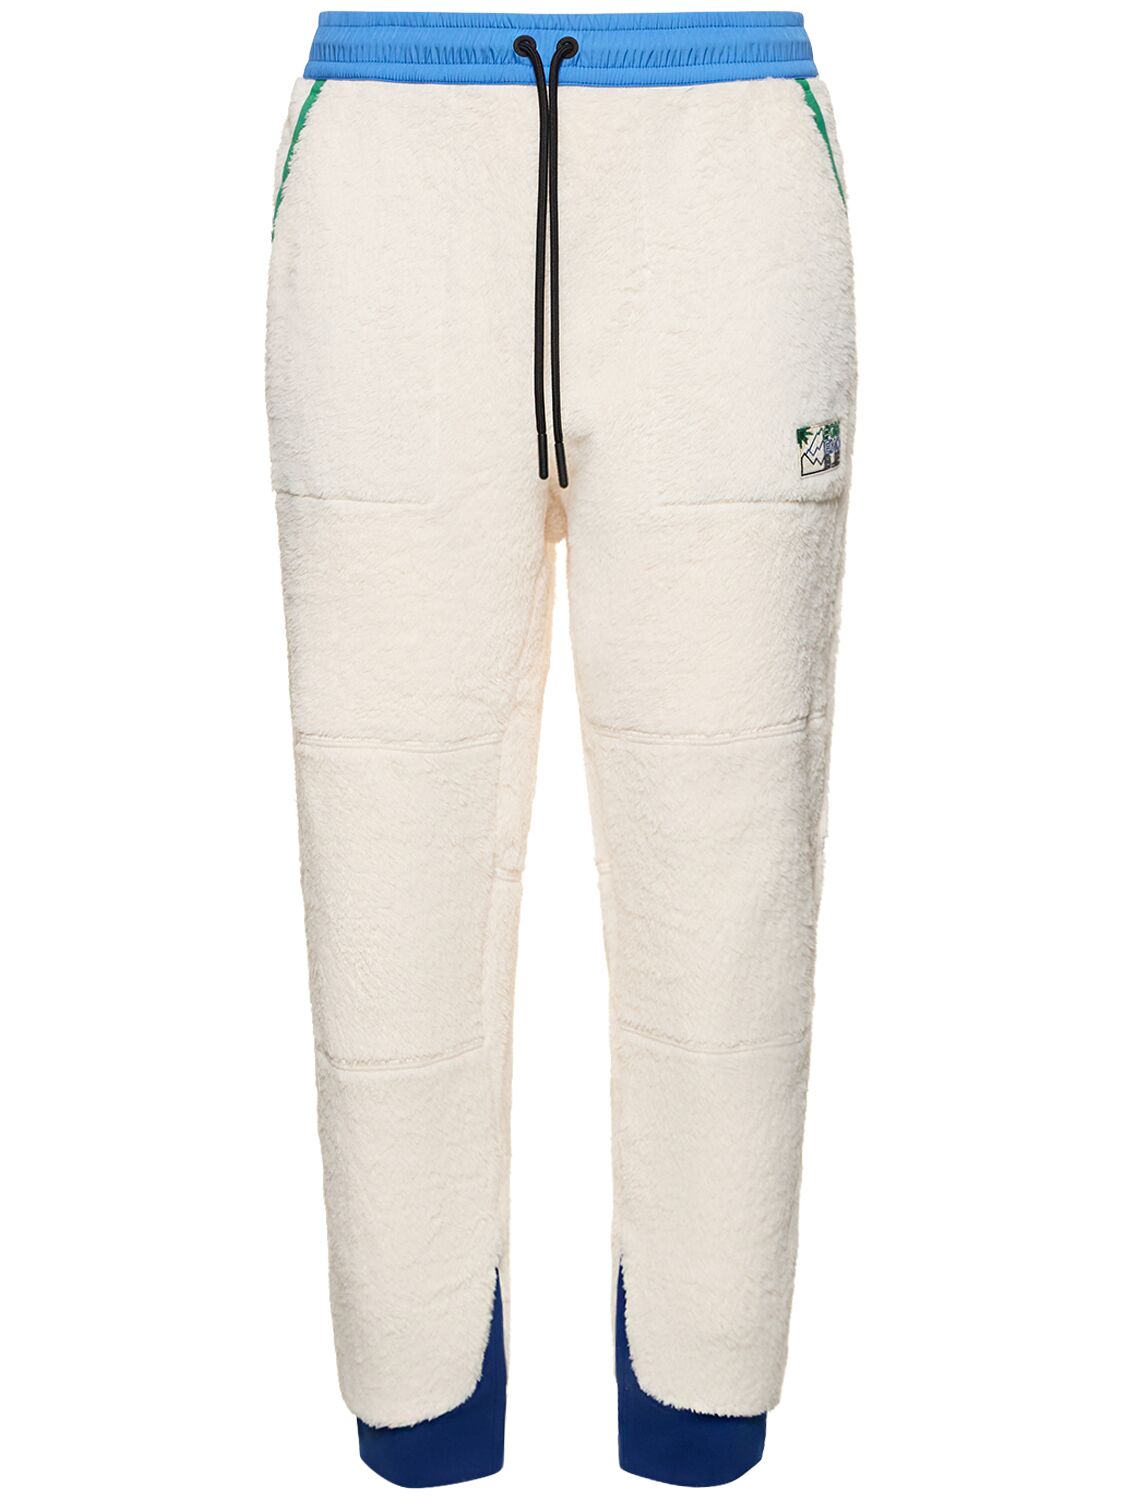 Image of Day-namic Polartec Nylon Sweat Pants